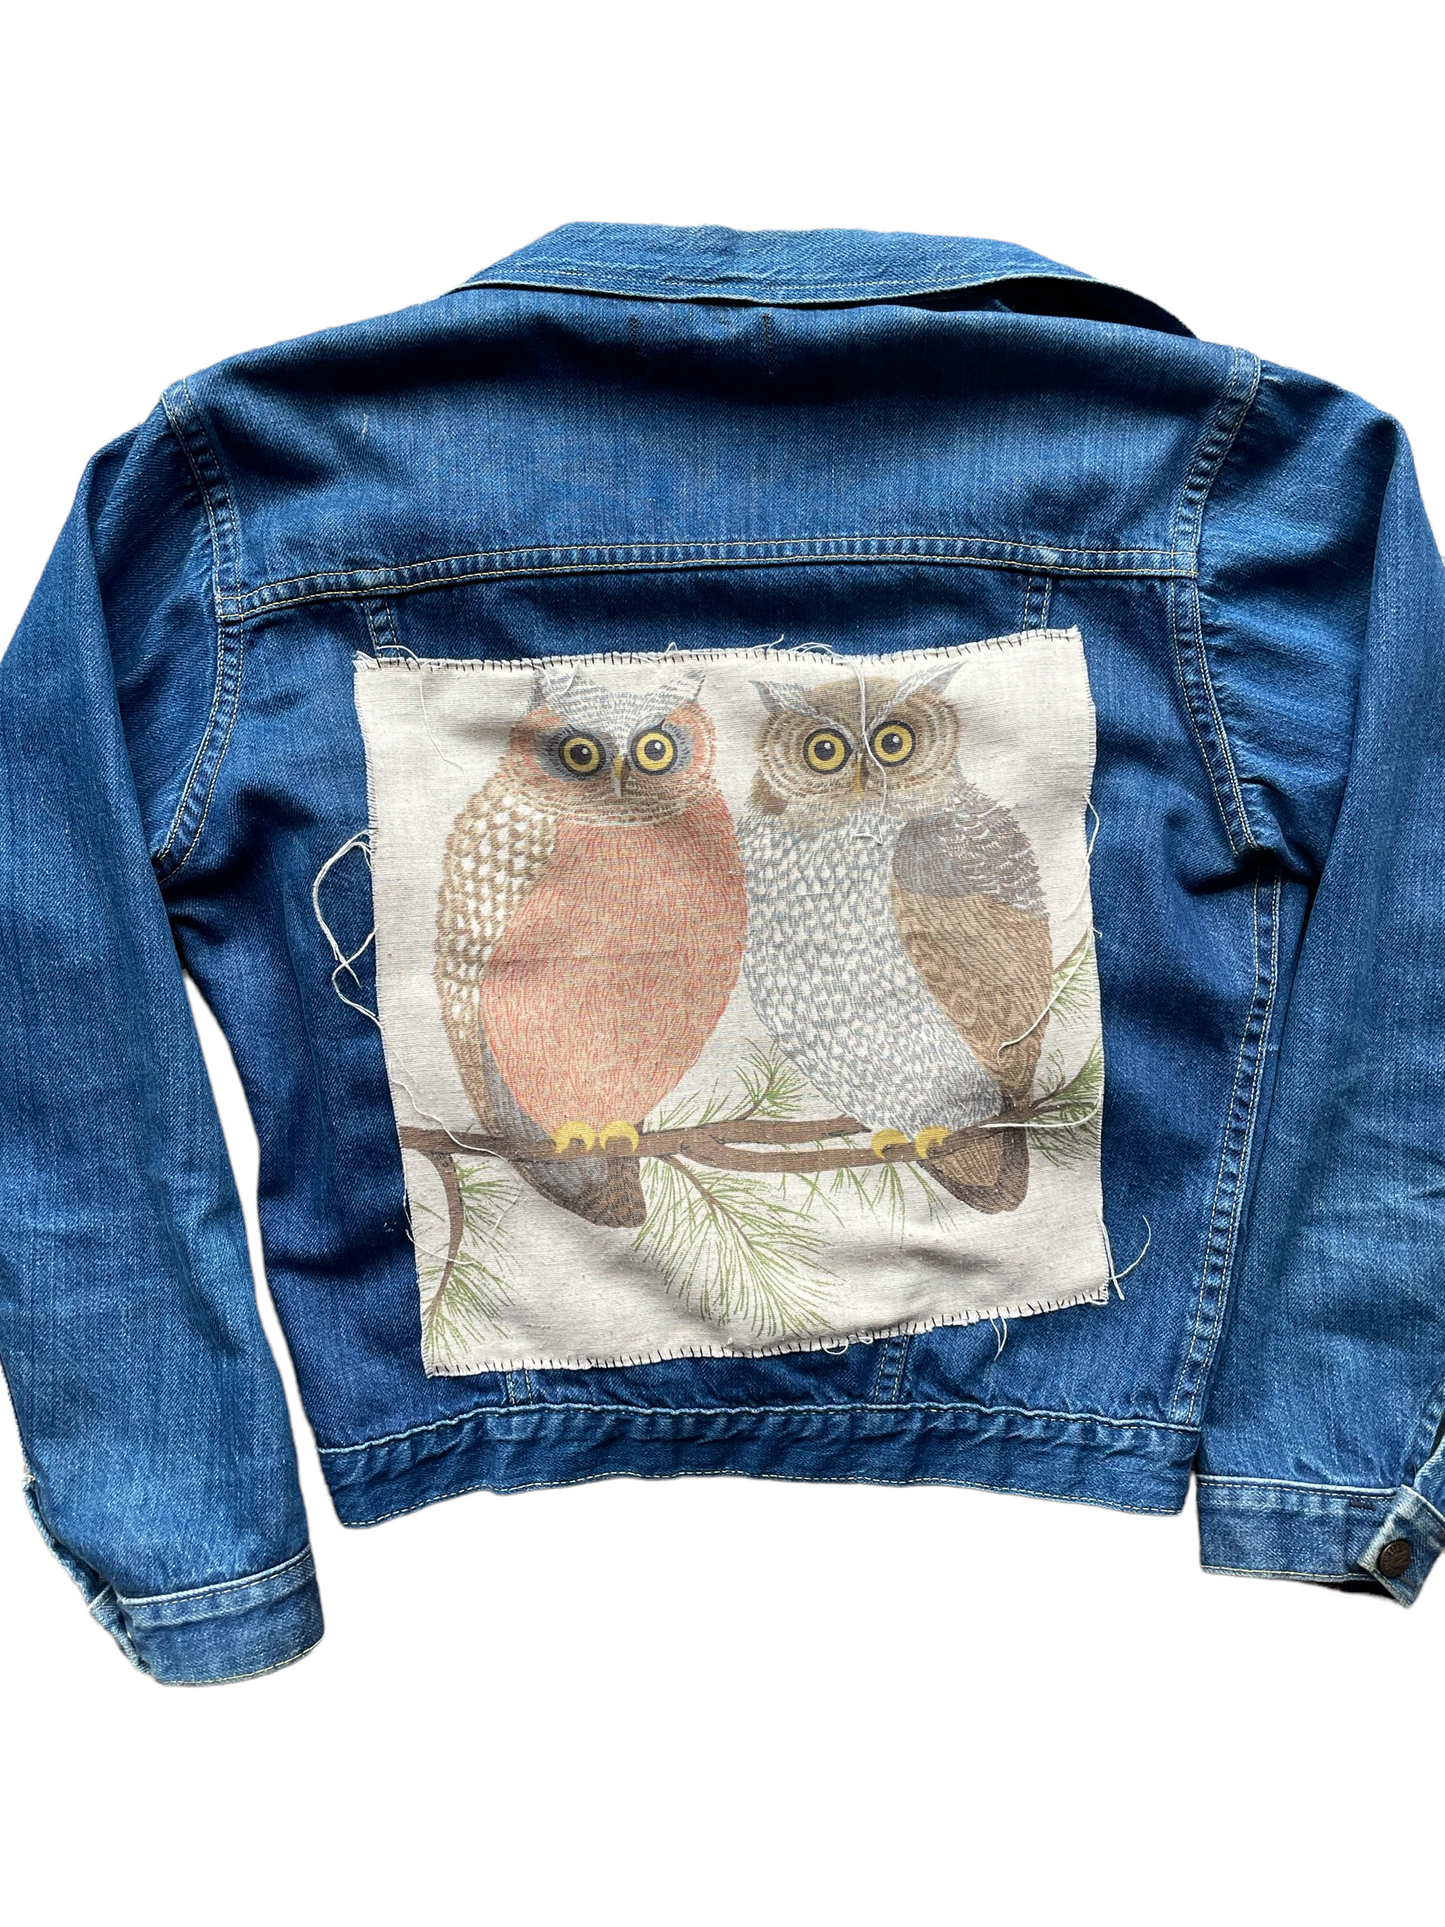 Cropped Rear View of Vintage Madewell Selvedge Denim Jacket | Barn Owl Vintage | Seattle Vintage Denim Workwear Clothing